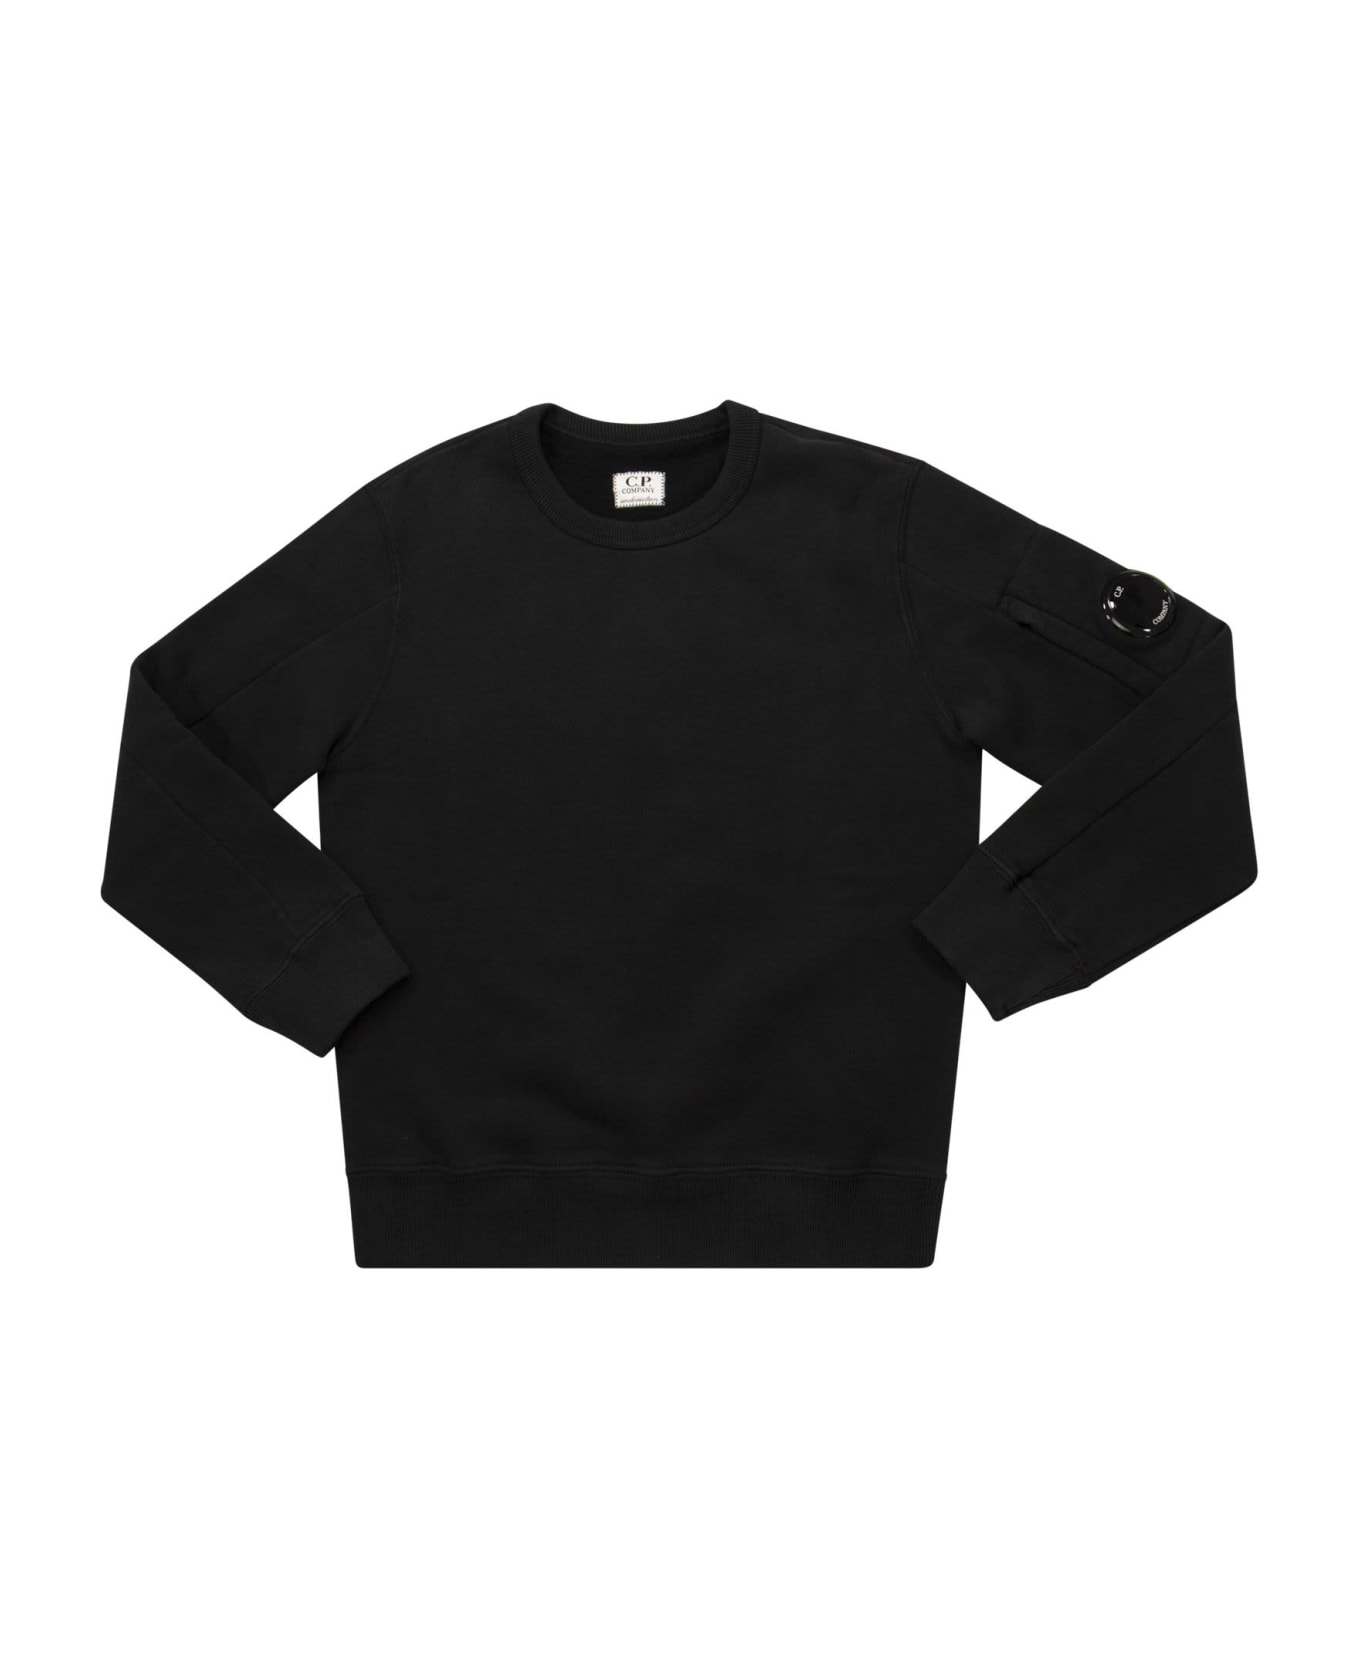 C.P. Company Sweatshirt Basic Fleece Lens - Black